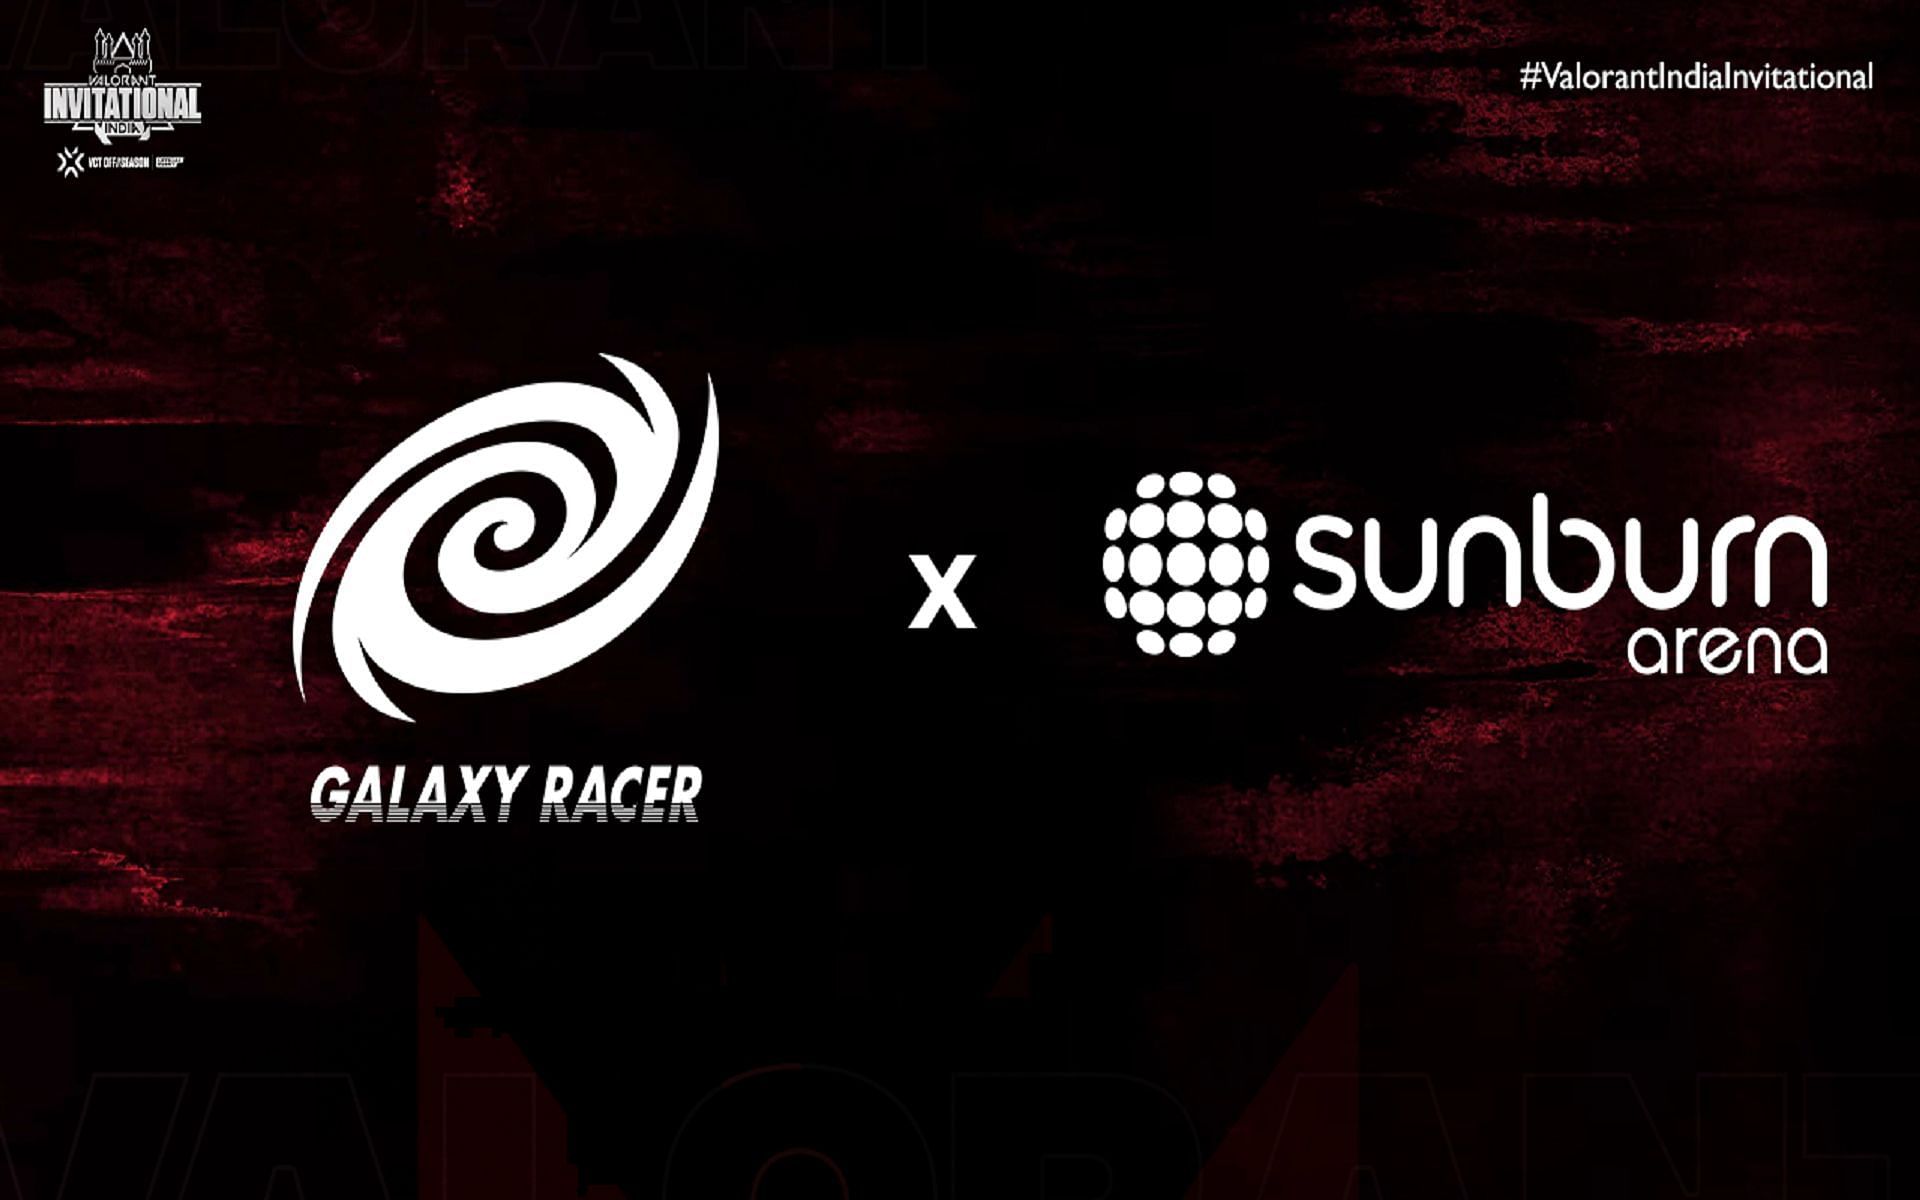 Galaxy Racer to collaborate with Sunburn for Valorant India Invitational (Image via Galaxy Racer, Sunburn)